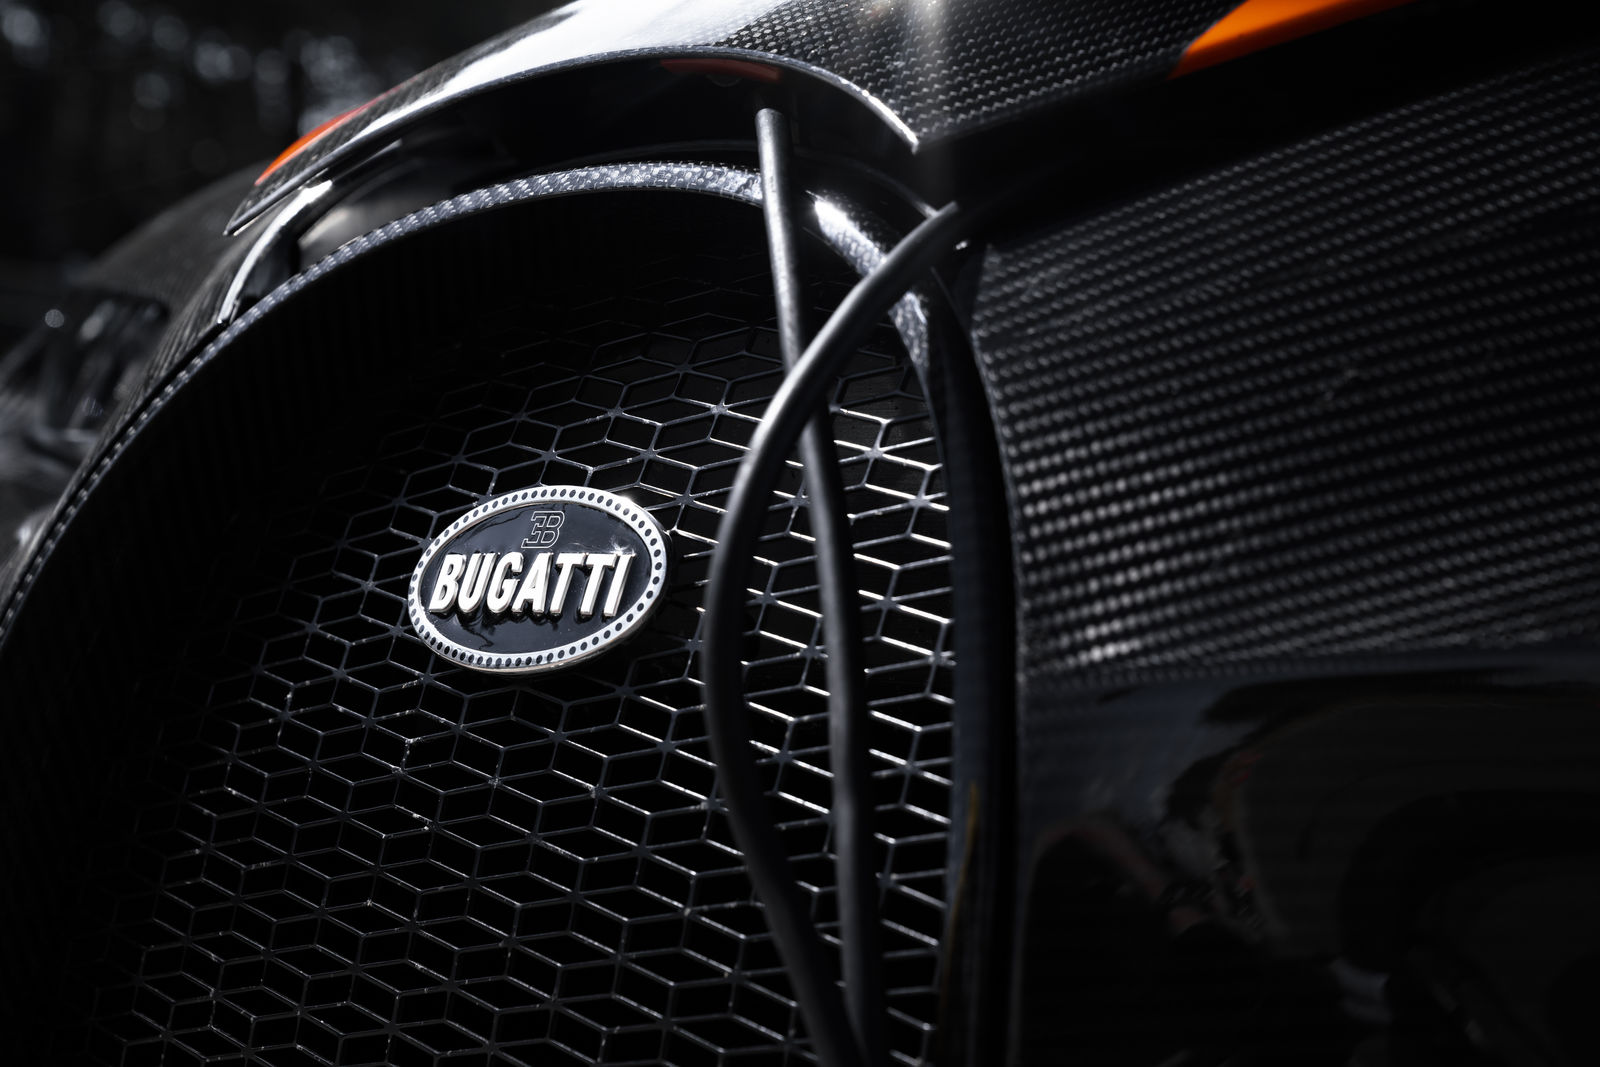 Bugatti Chiron 300 mph